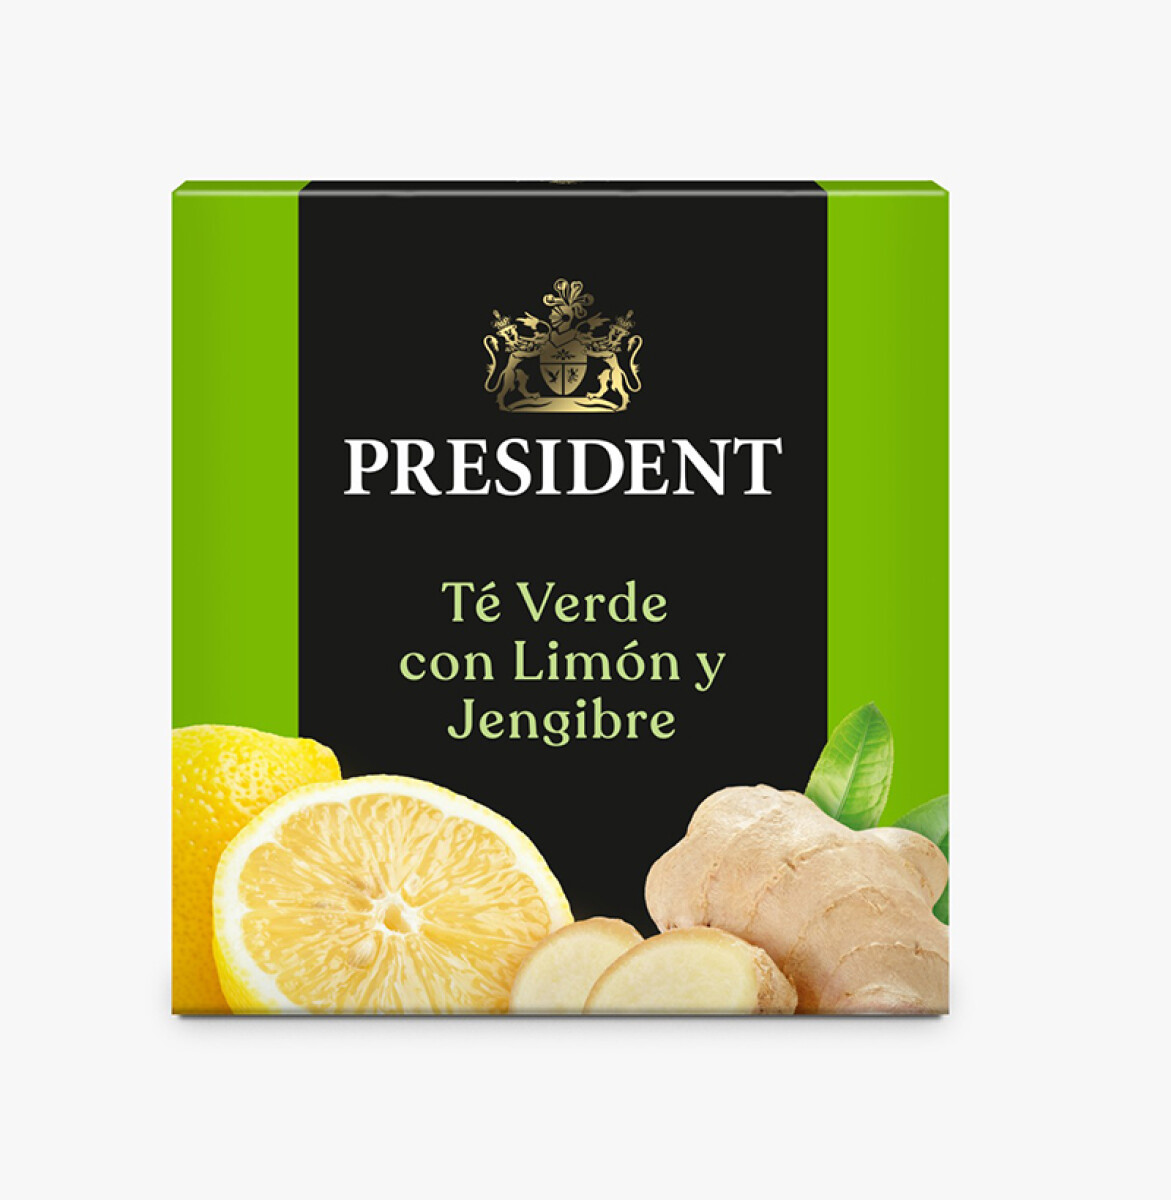 Té President línea sabores - Té verde con limón y jengibre 